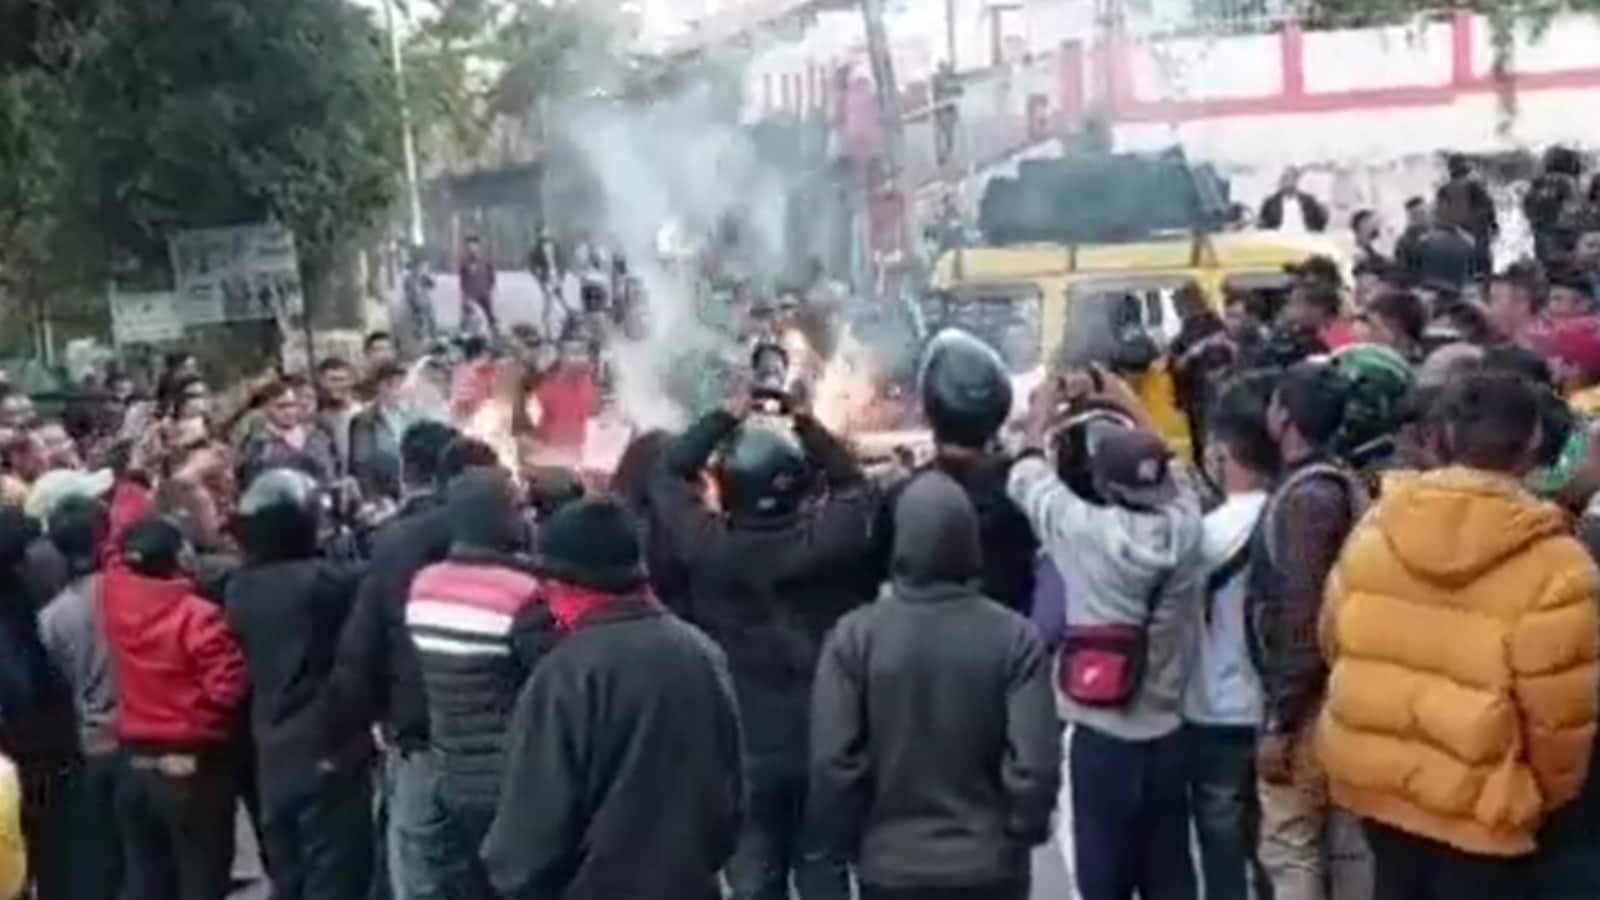 amid meghalaya violence, protesters burn effigies of shah, cm sangma: report | flipboard